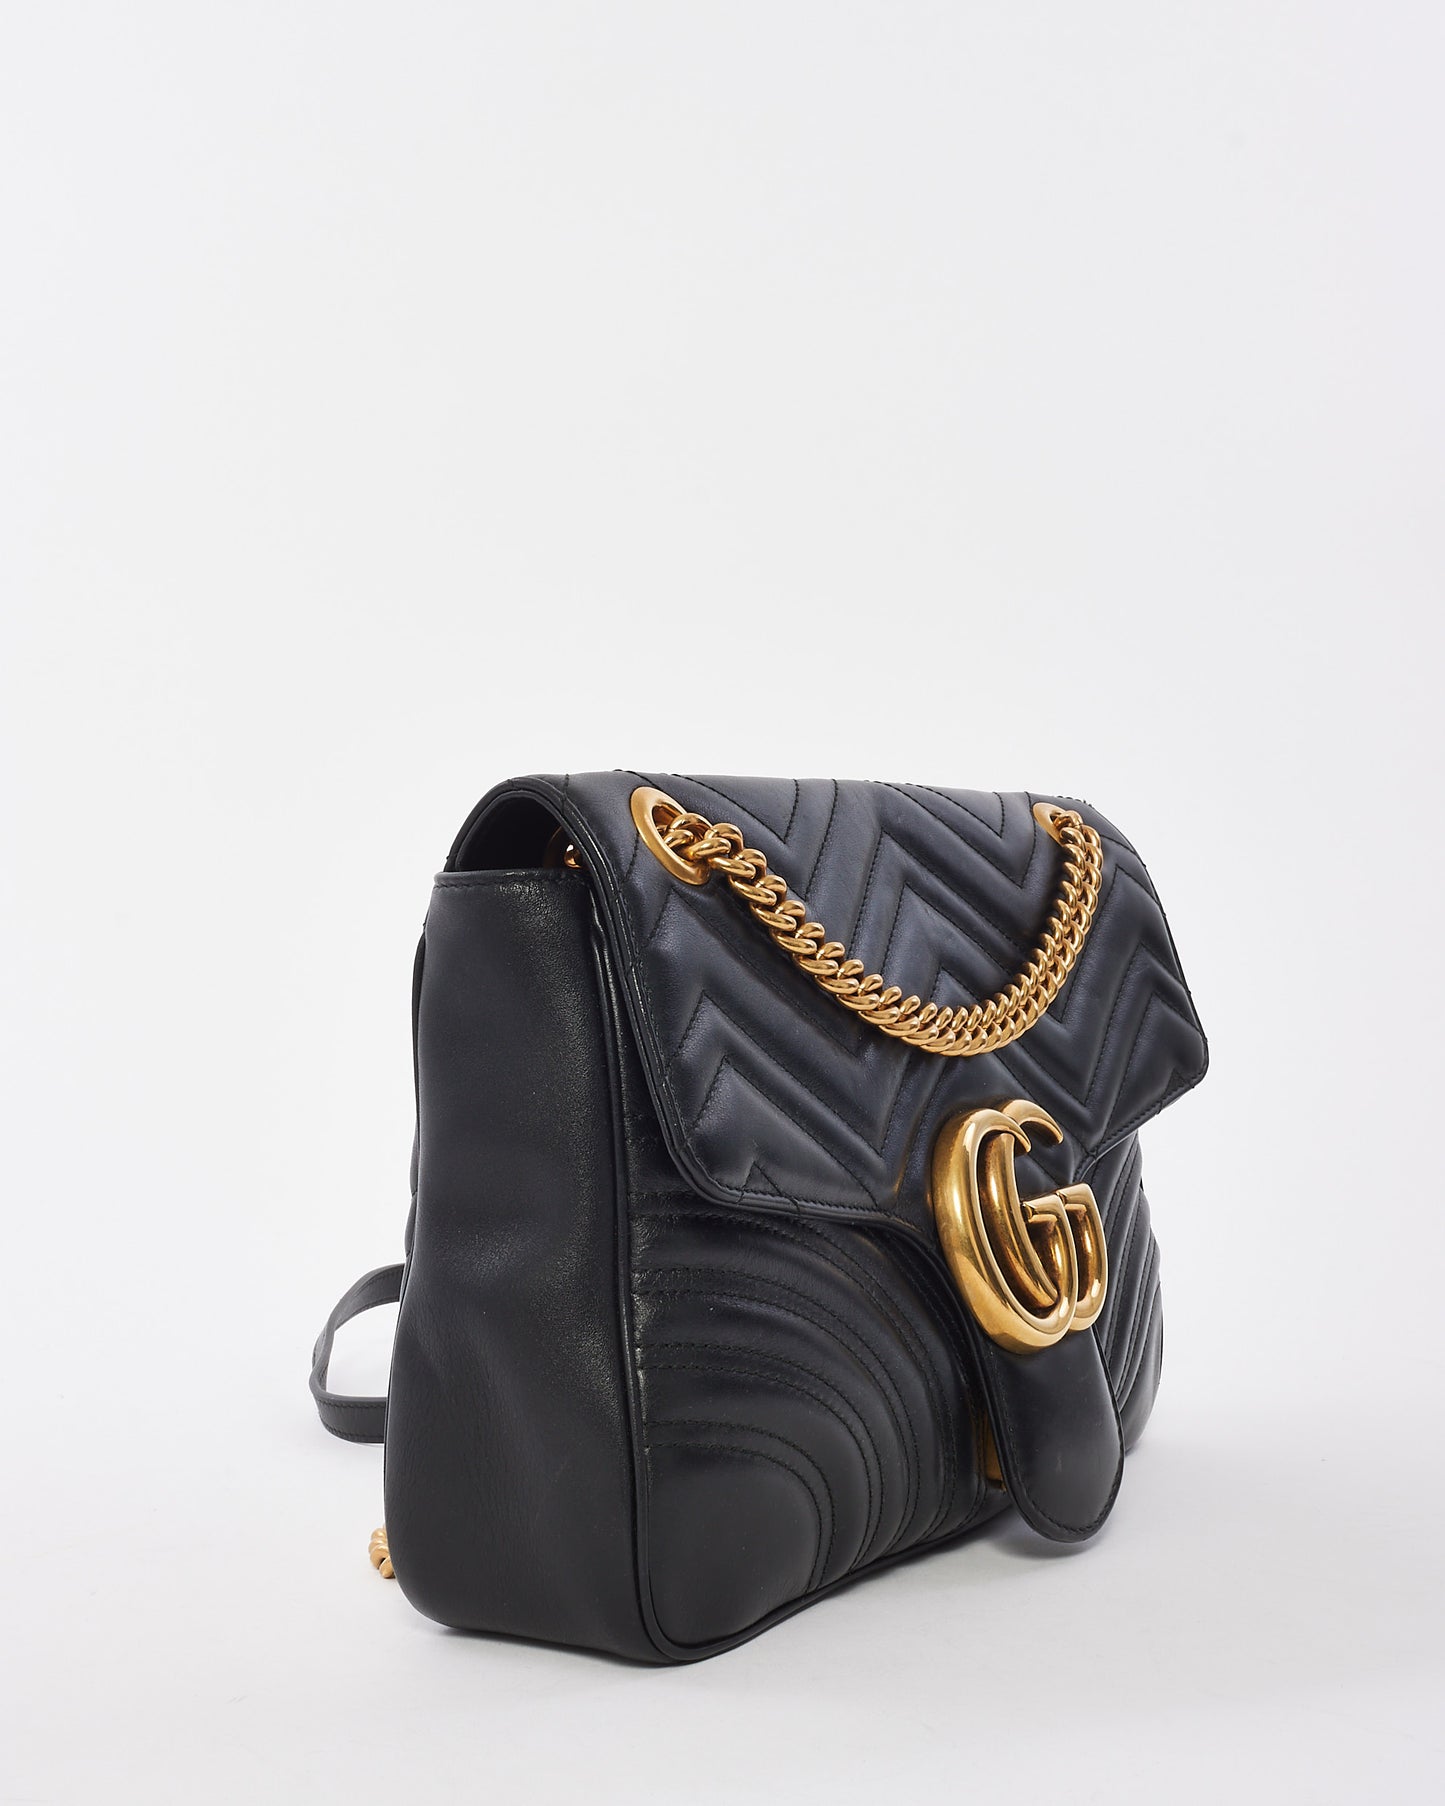 Gucci Black Matelassé Leather Medium GG Marmont Flap Bag